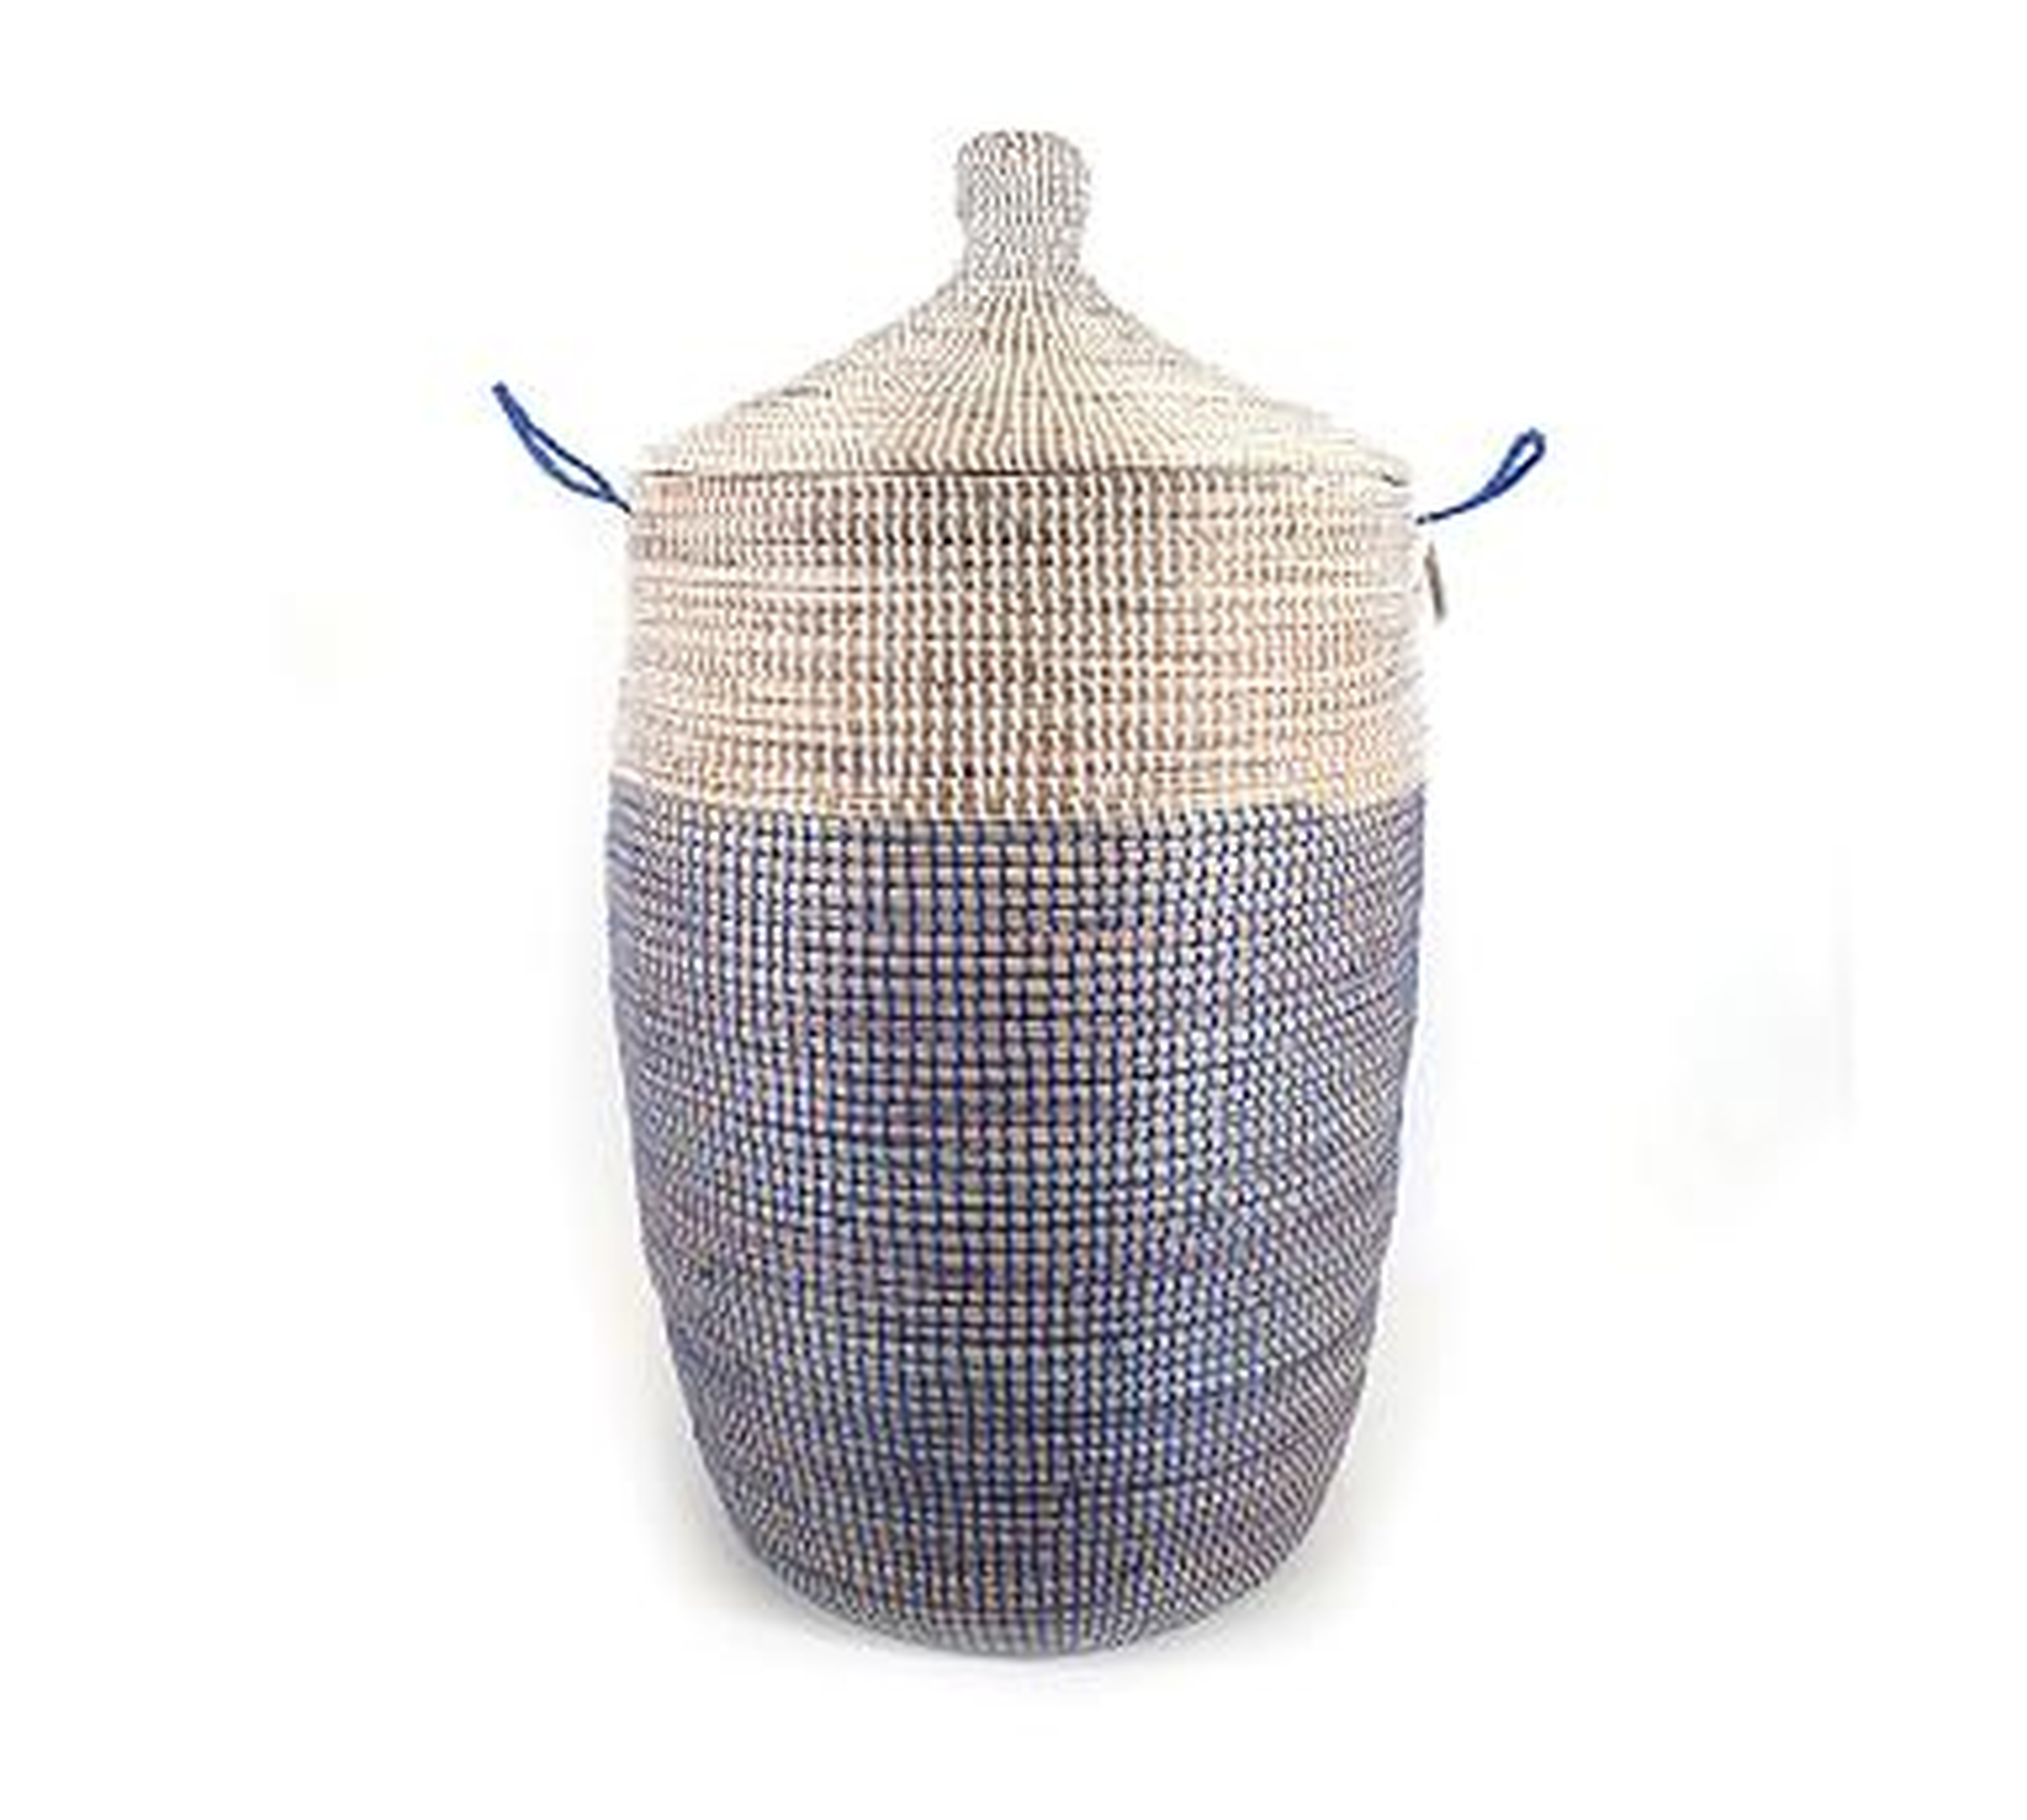 Tilda Two-Tone Woven Basket, Navy - Large - Pottery Barn